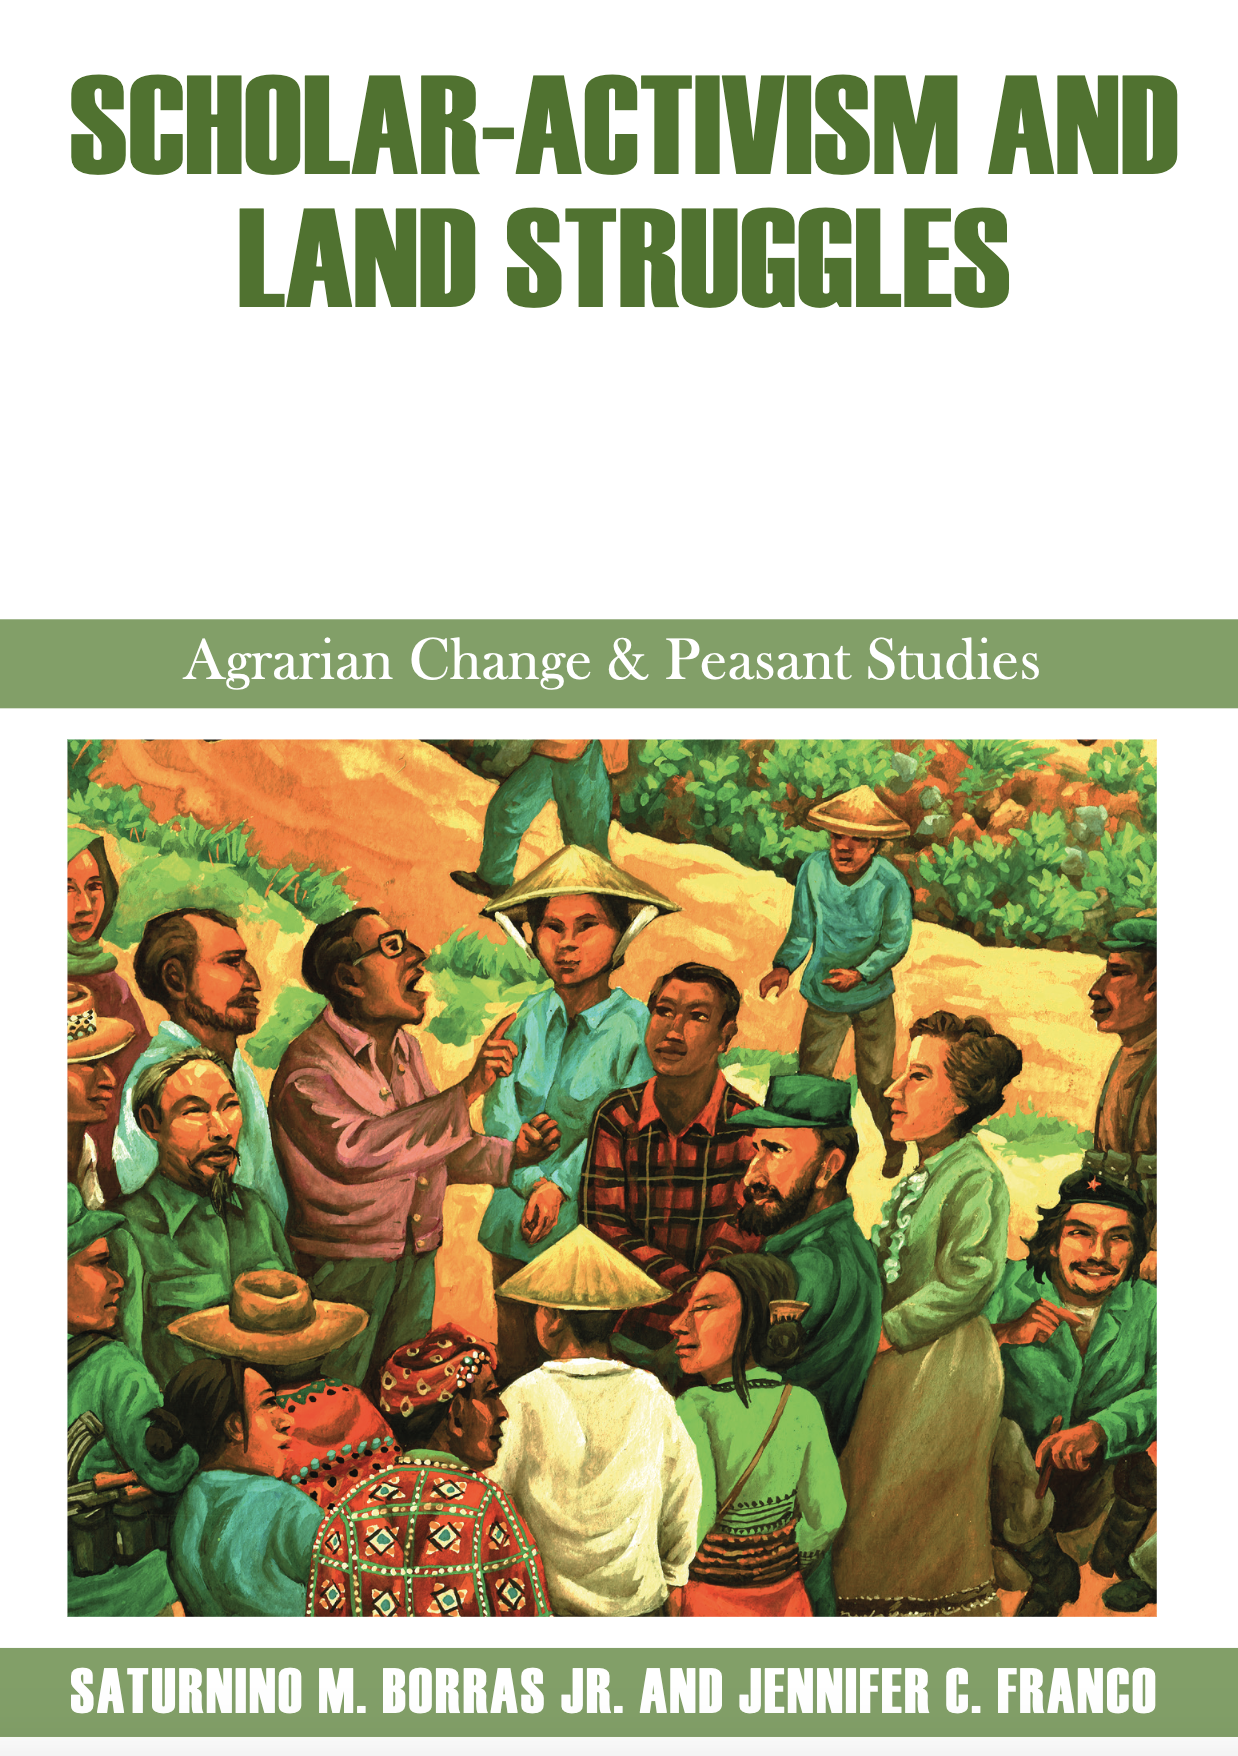 Scholar-Activism and Land Struggles, Saturnino M Borras Jr. and Jennifer C. Franco Promo Image